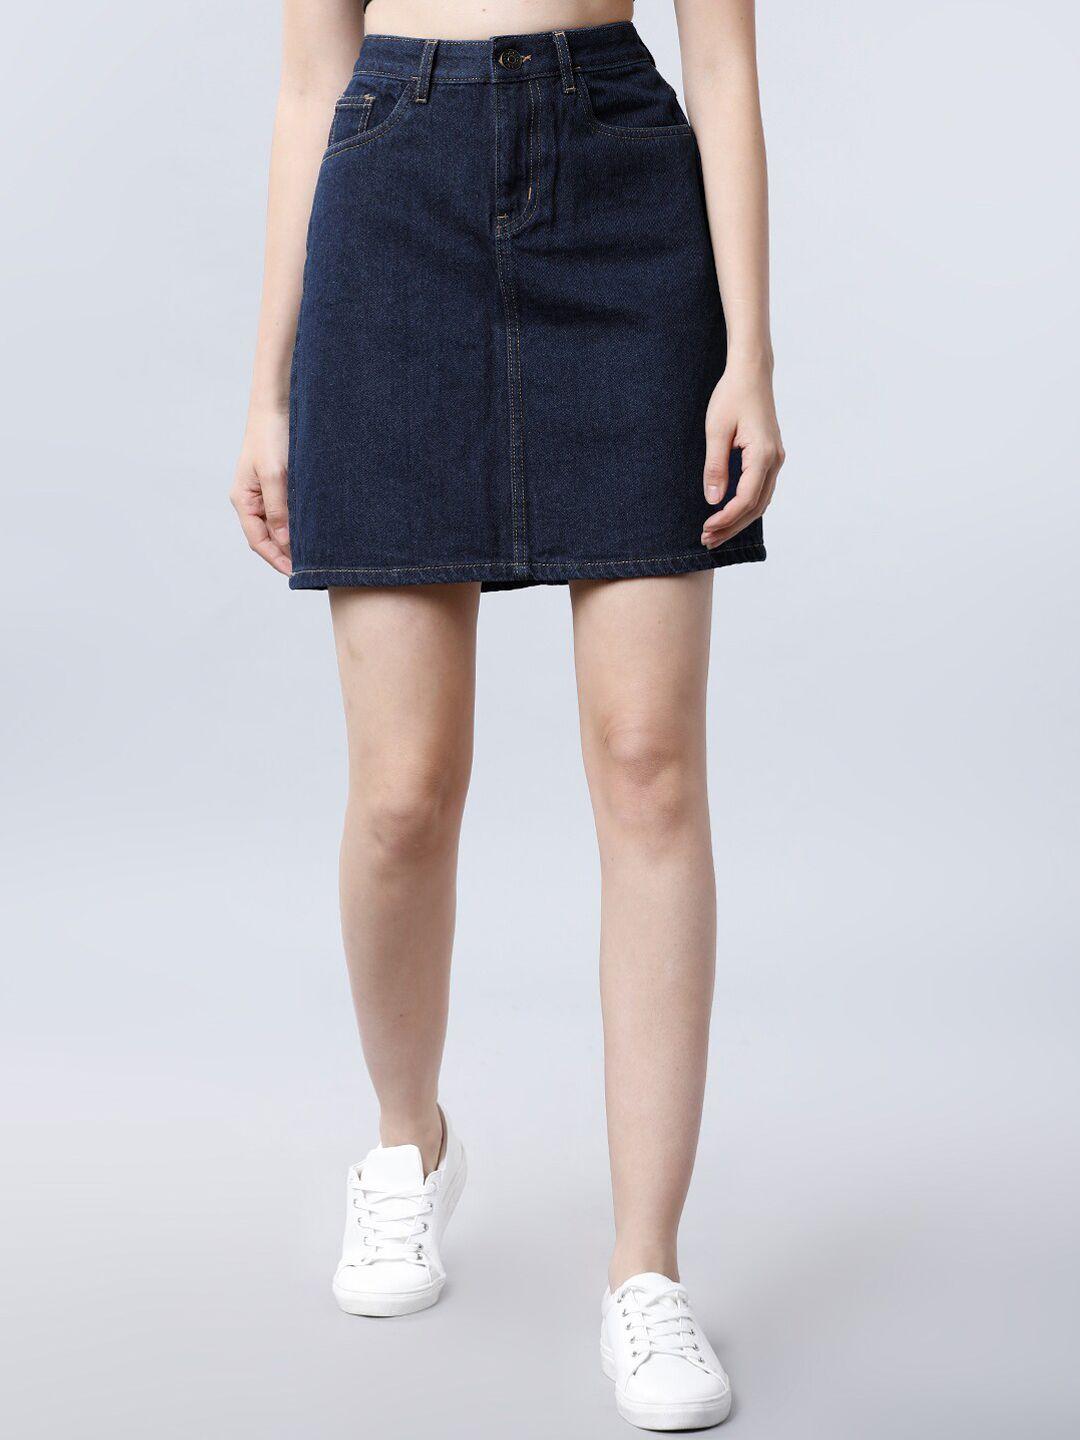 tokyo talkies navy blue a-line pure cotton skirt